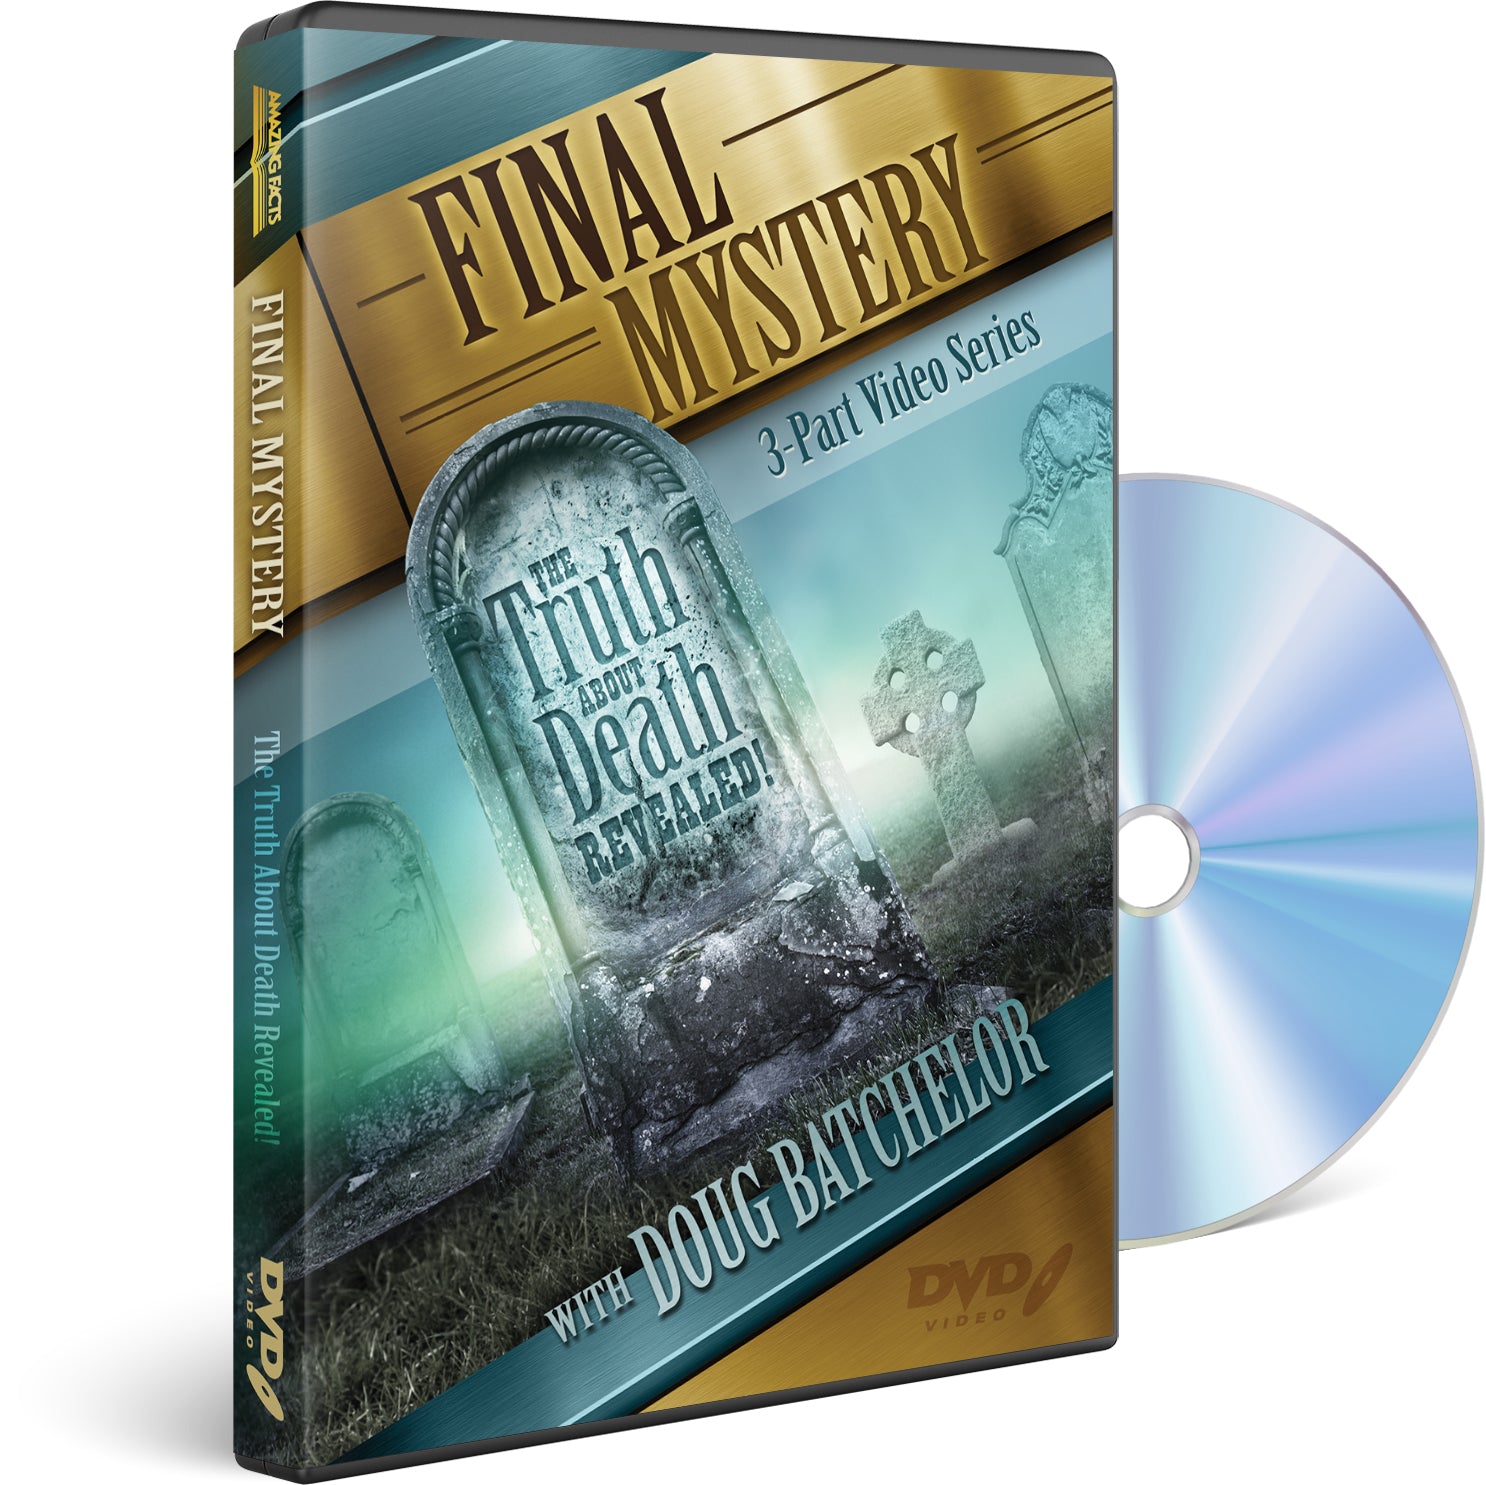 Final Mystery: 3 Part Video Series by Doug Batchelor